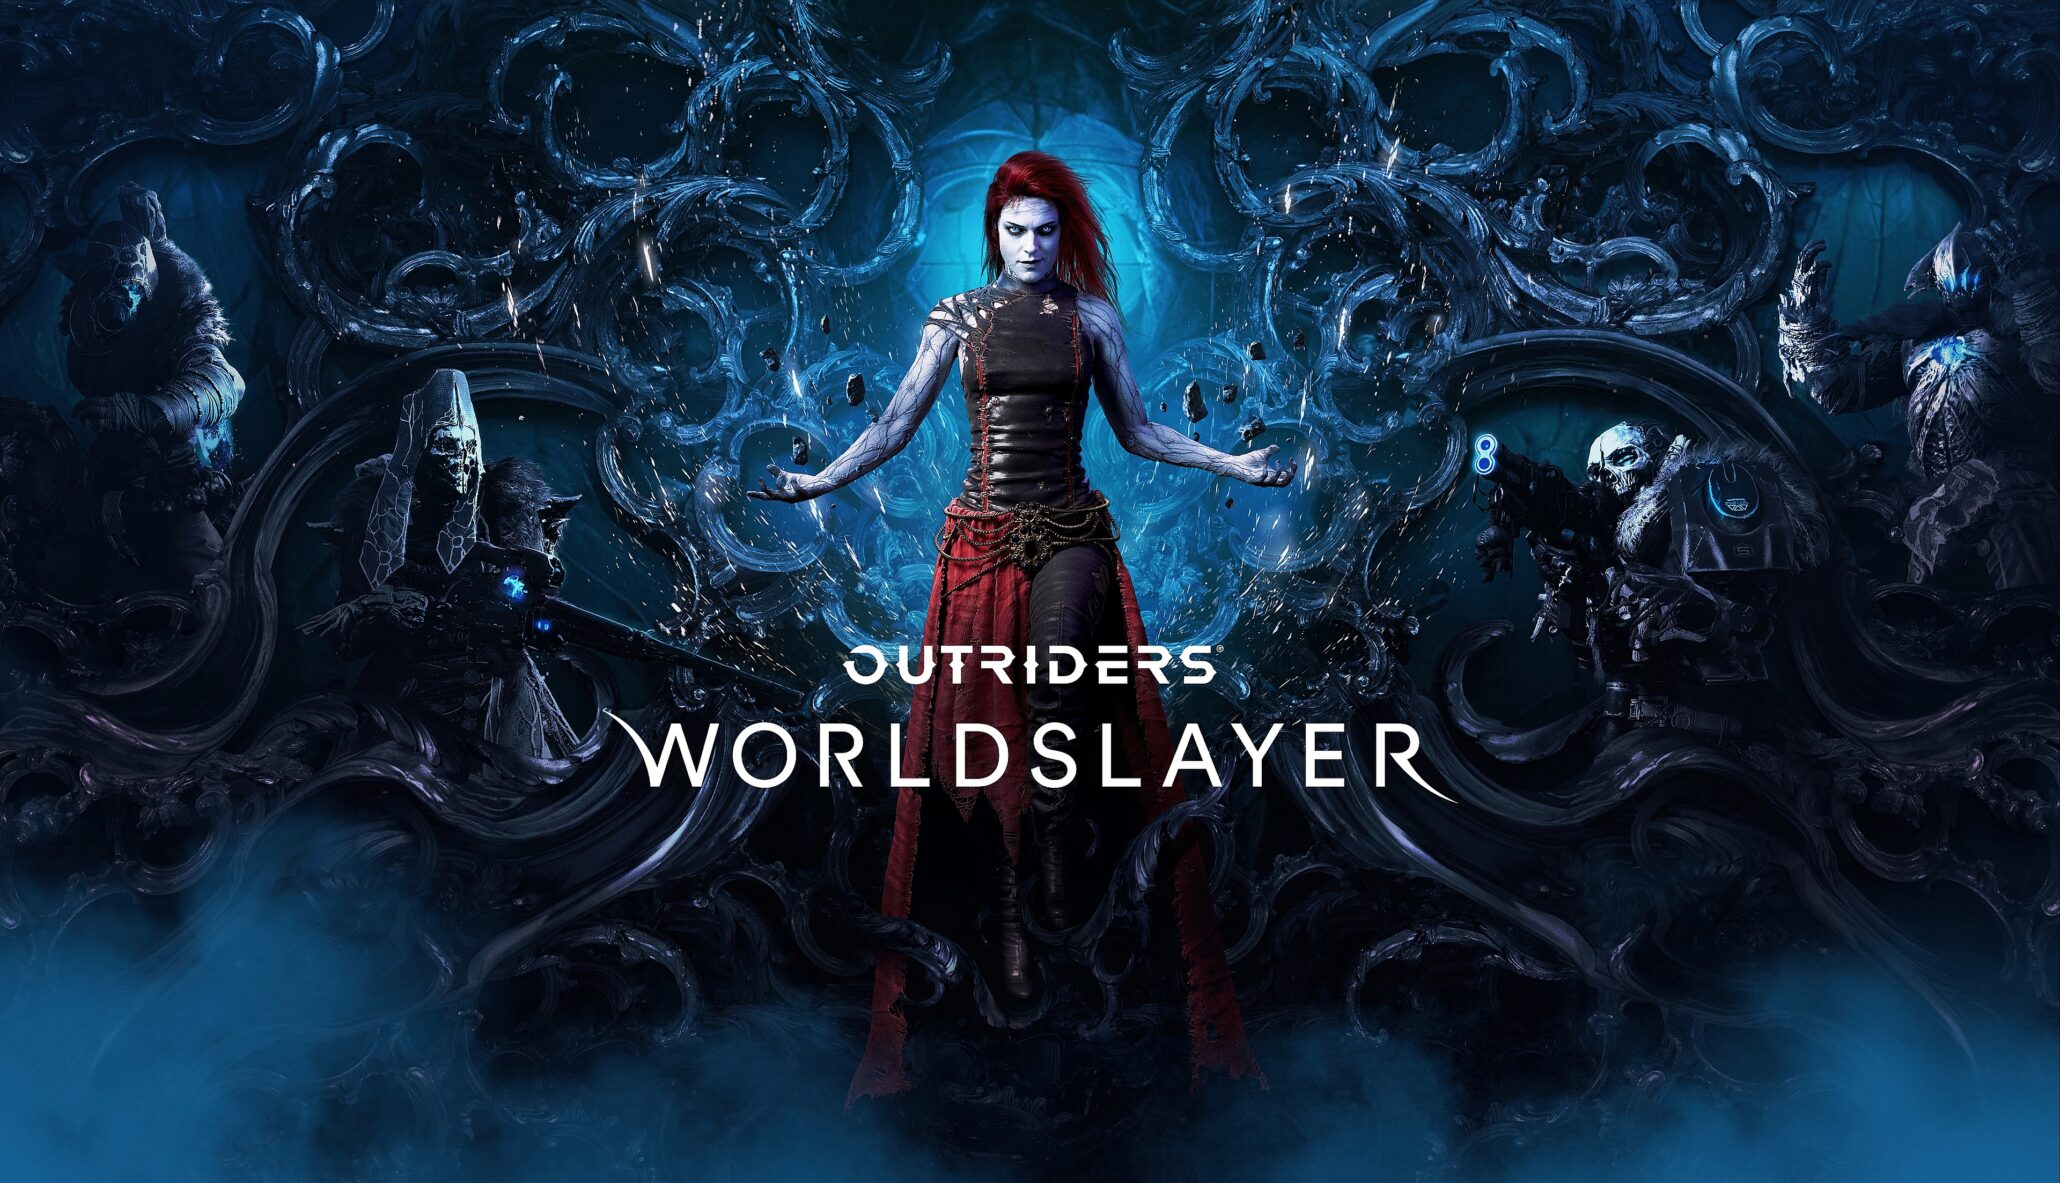 《Outriders》首个资料片“Worldslayer”公布 Steam国区180元促销